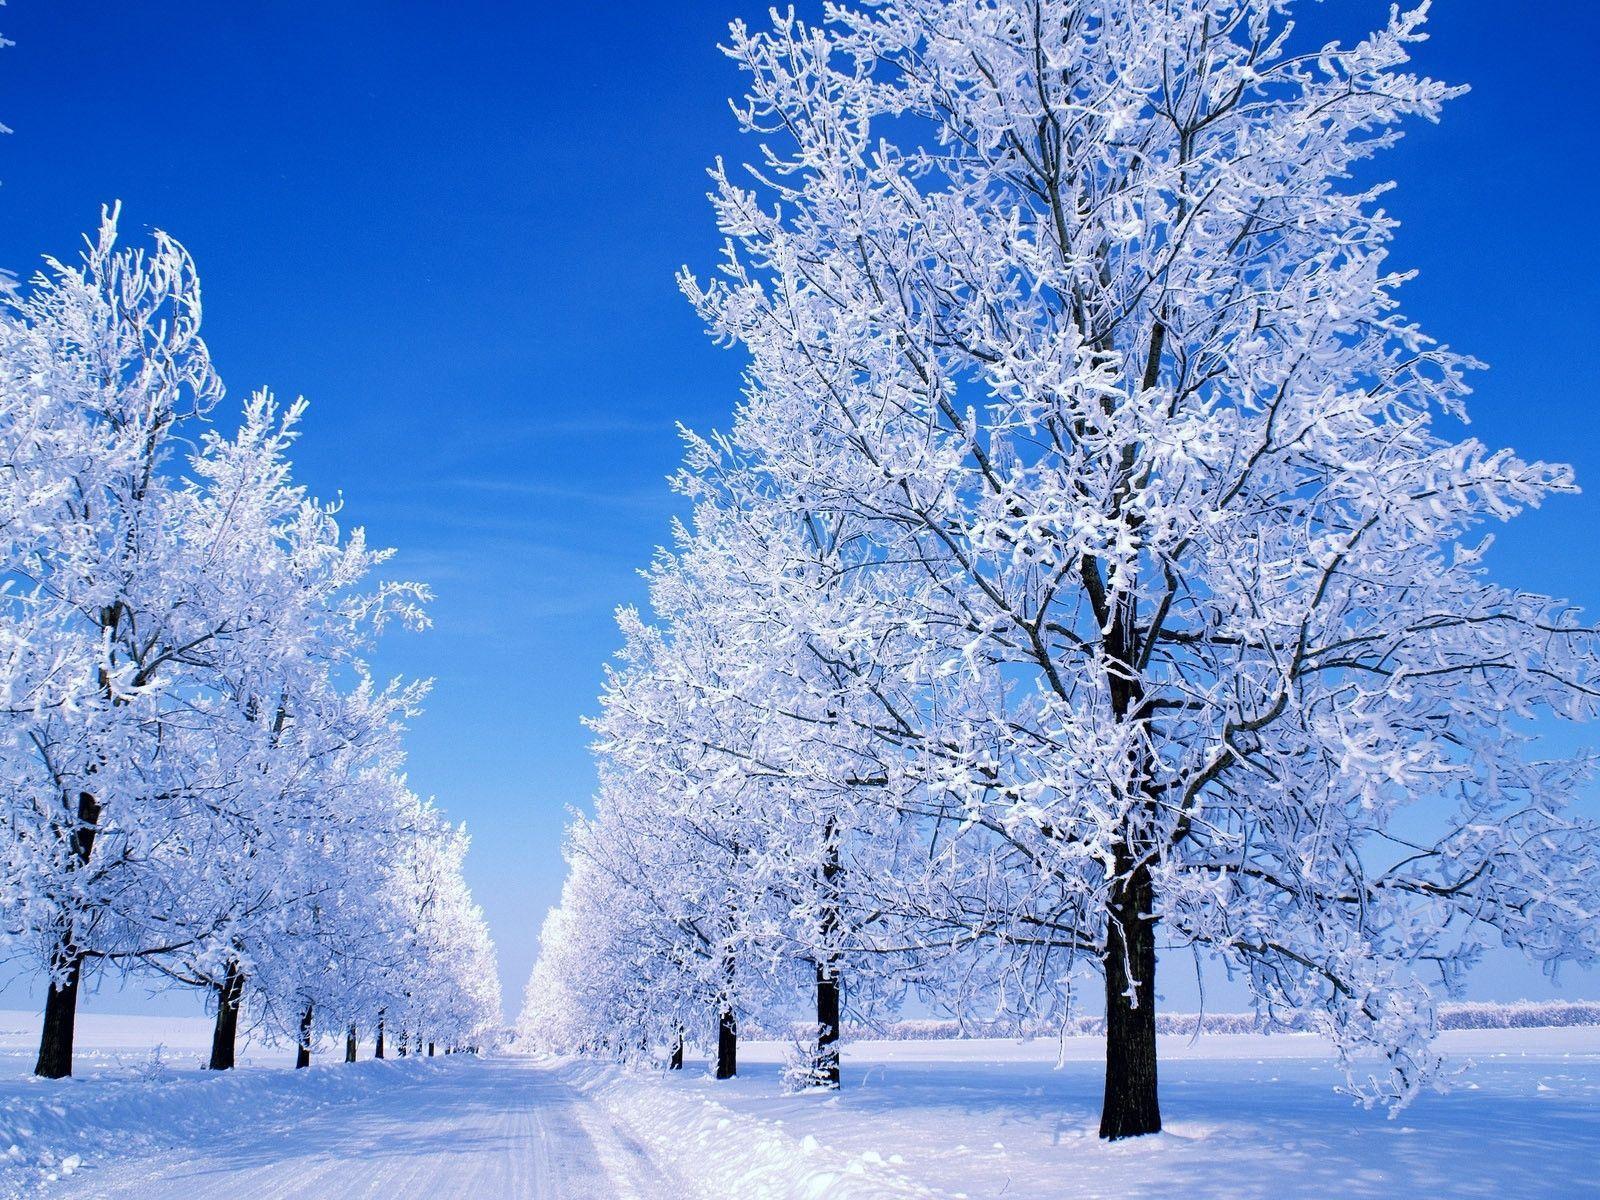 1600x1200 Great Winter Snowy Scene desktop wallpapers and stock photos